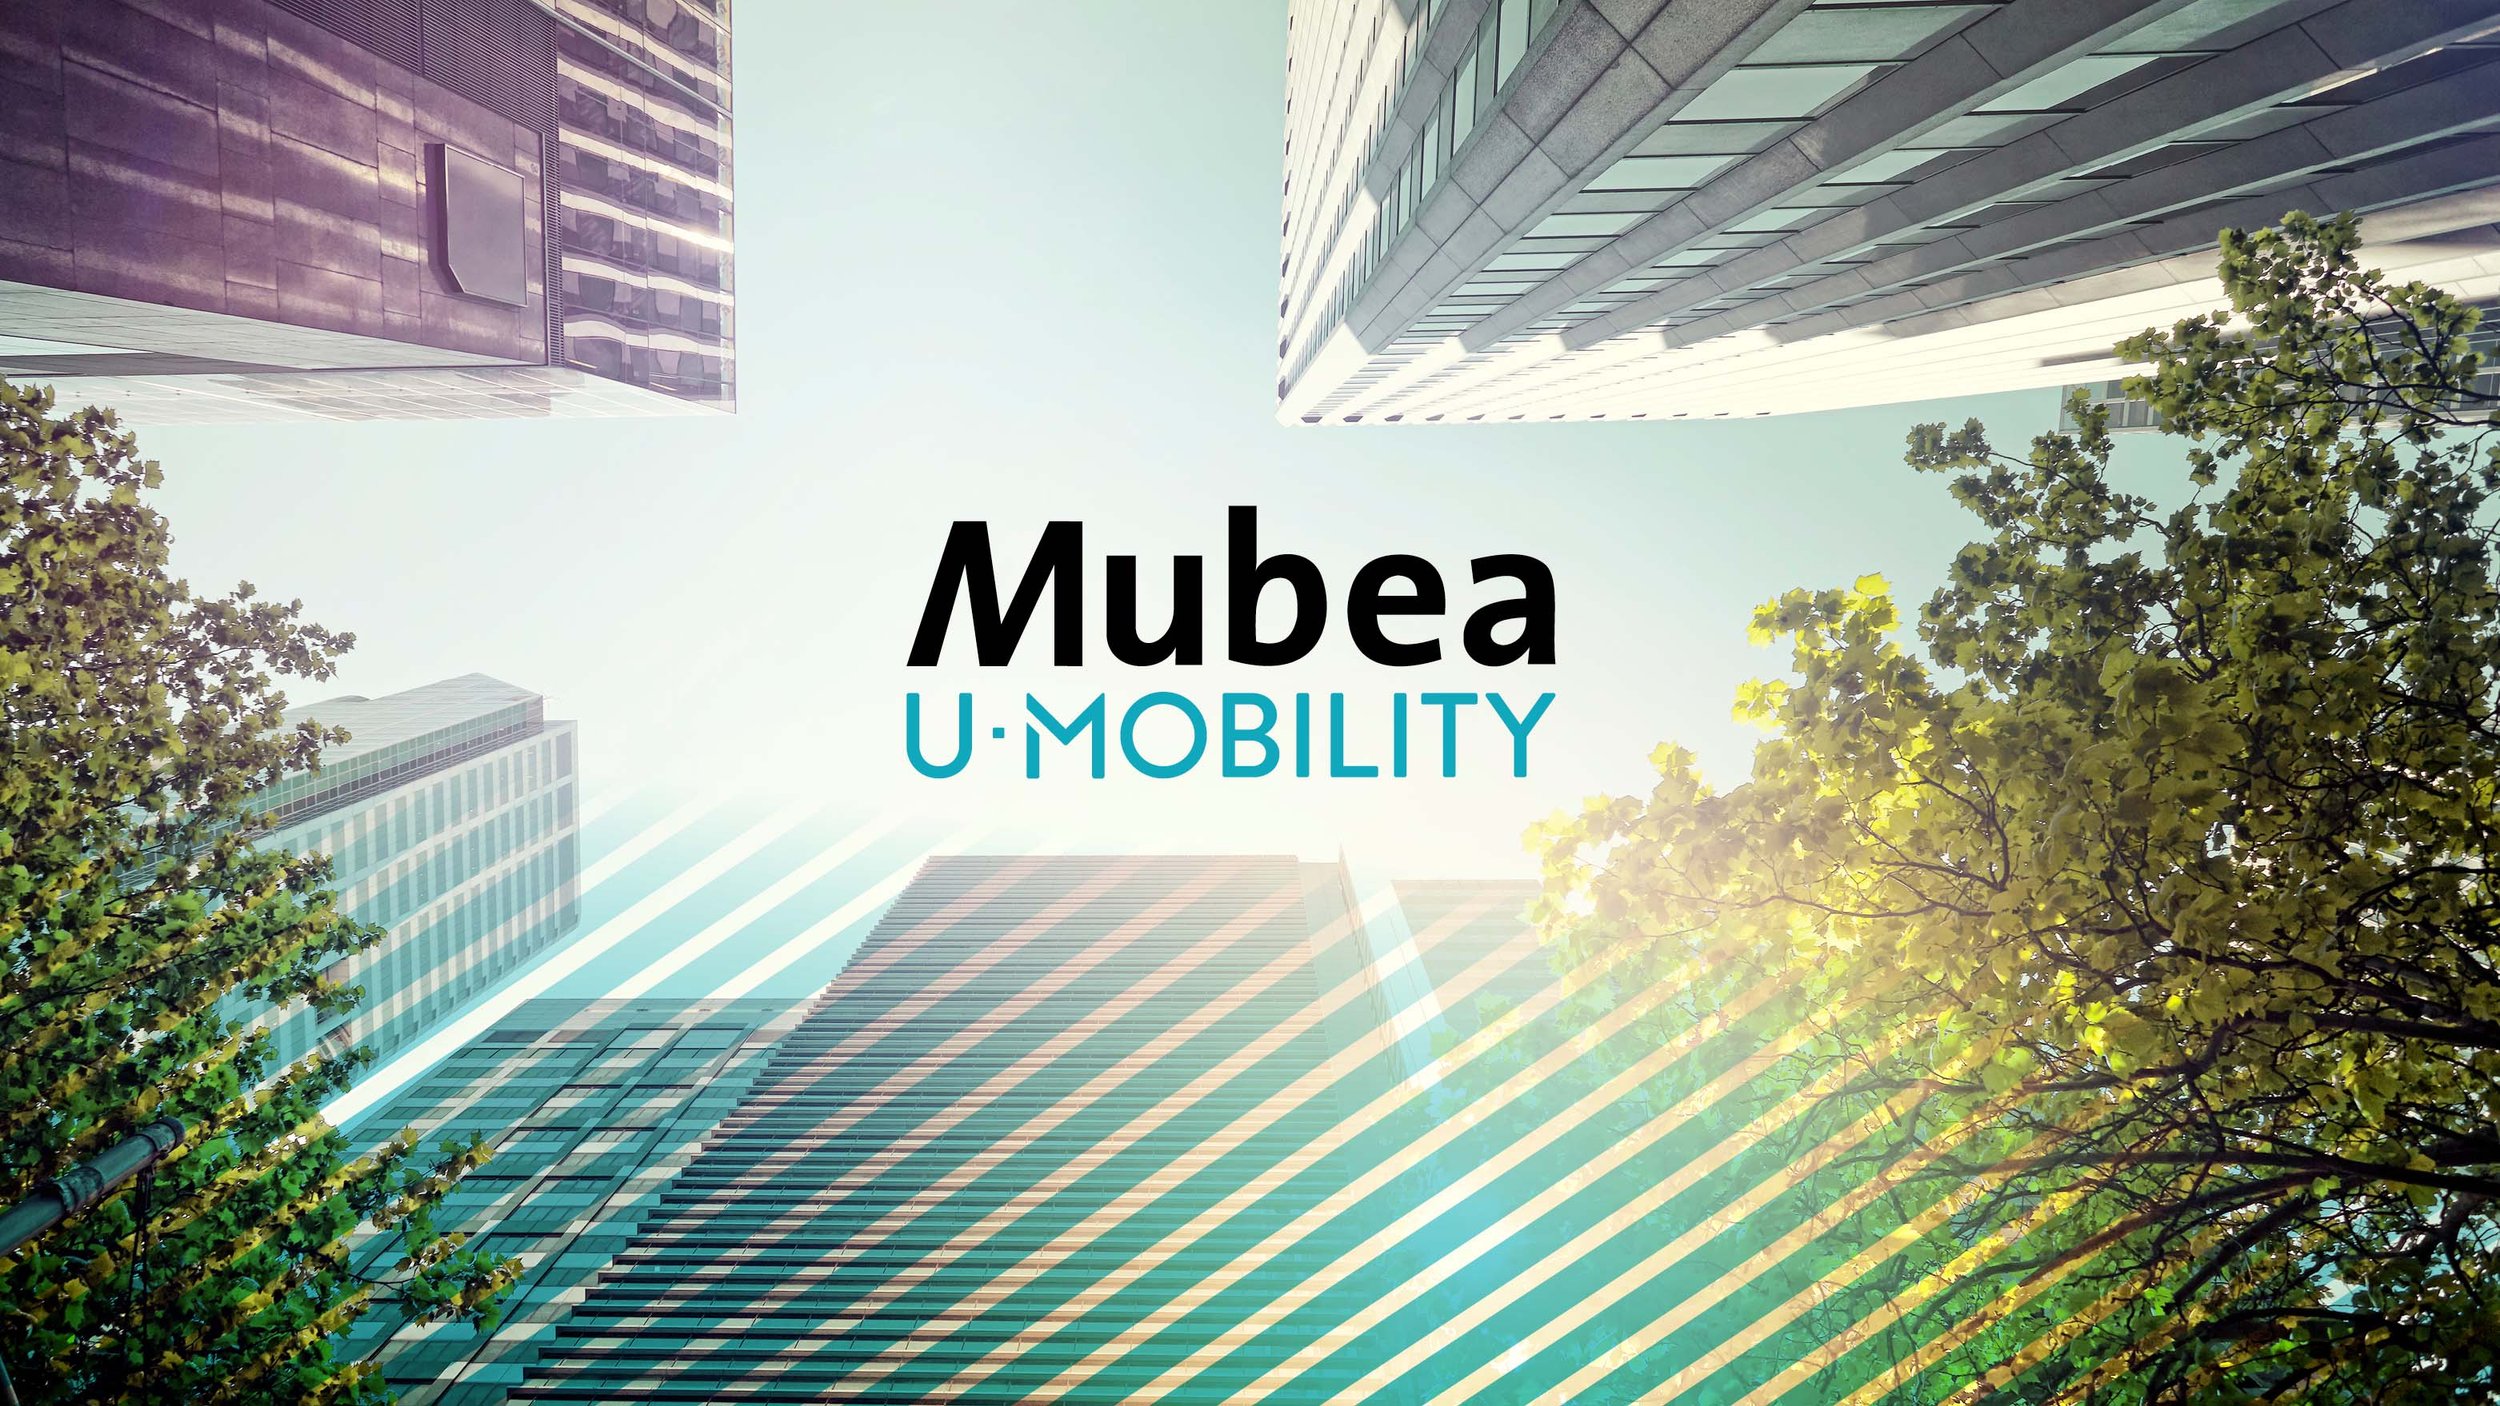 yellow-design-mubea-u-mobility-brand-1-low.jpg